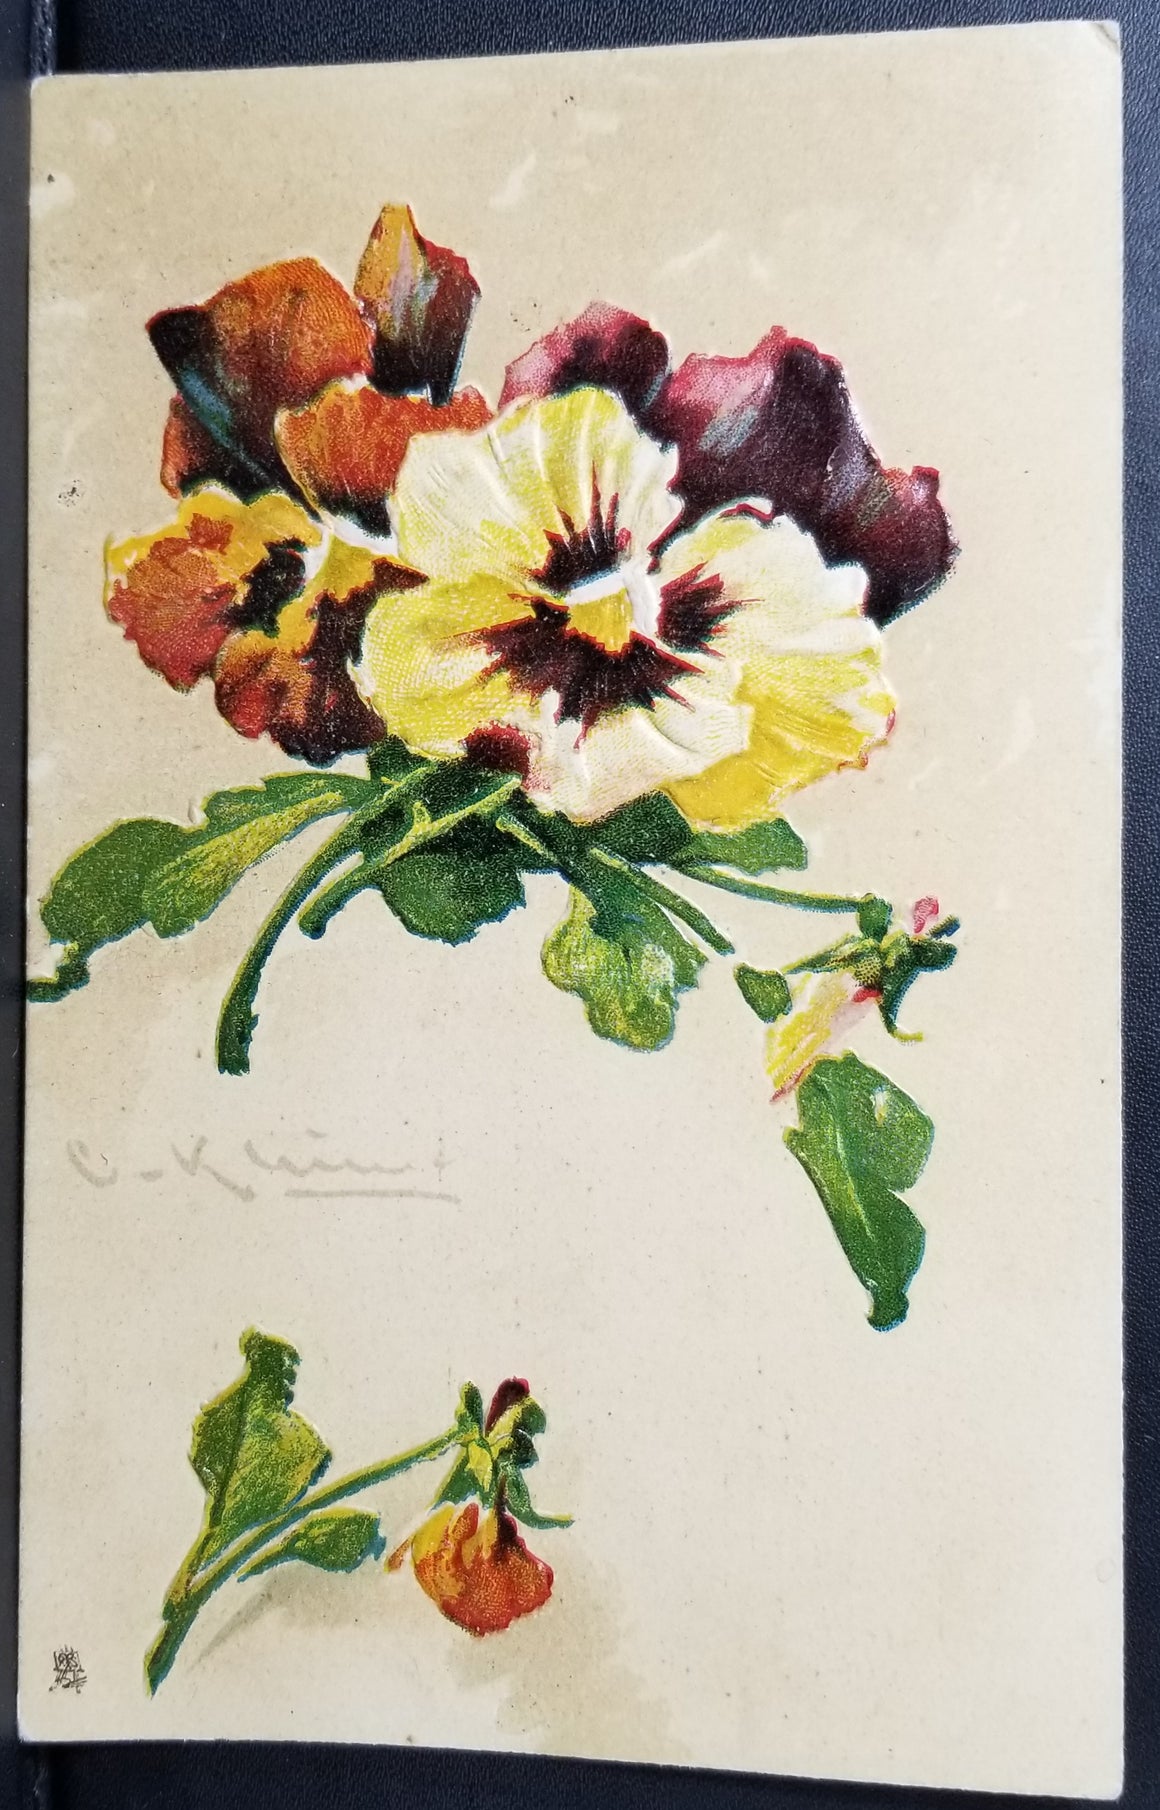 Artist Catherine Klein Flower Postcard Pansies Birthday Greetings Embossed Chromolithograph Botanical Card